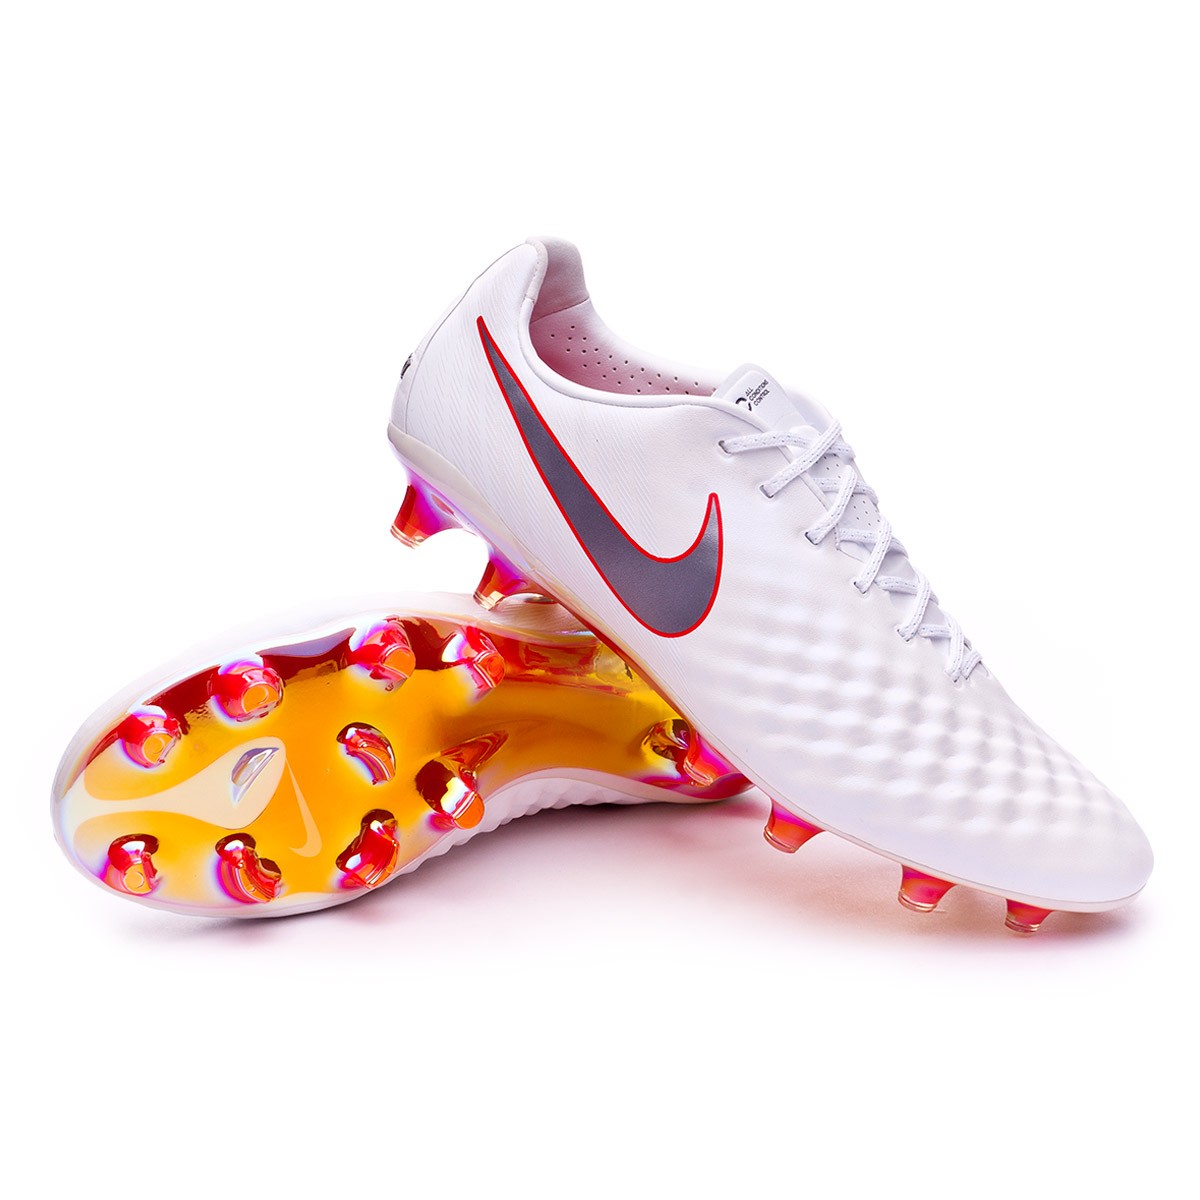 Football Boots Nike Magista Obra II Elite FG White-Metallic cool grey-Light  crimson - Football store Fútbol Emotion